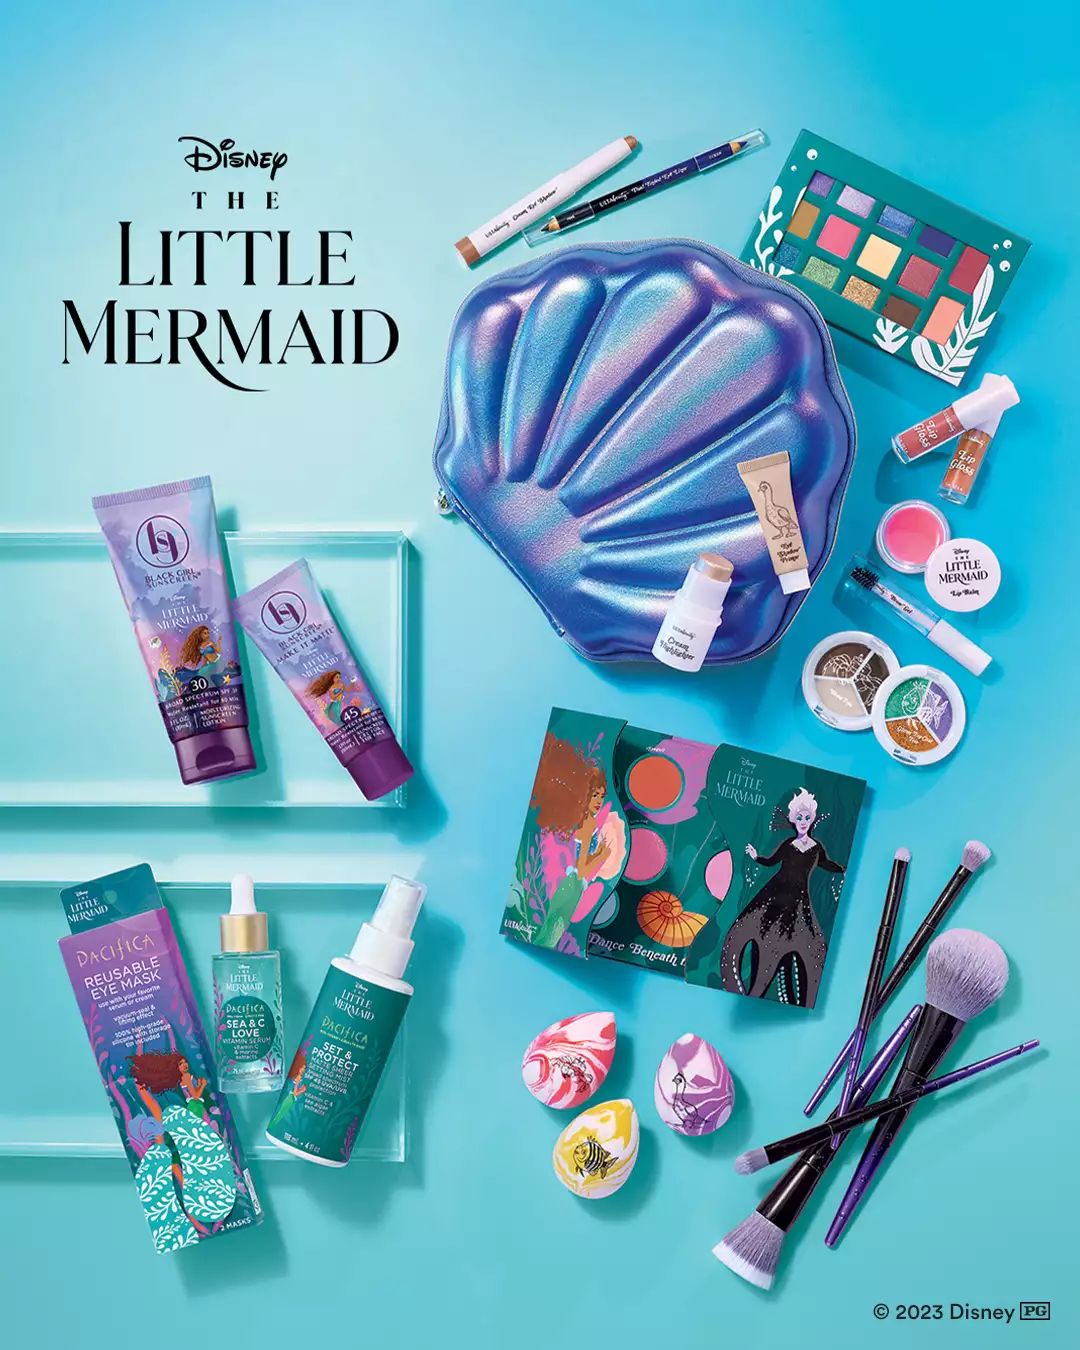 disney's the little mermaid ulta beauty collection